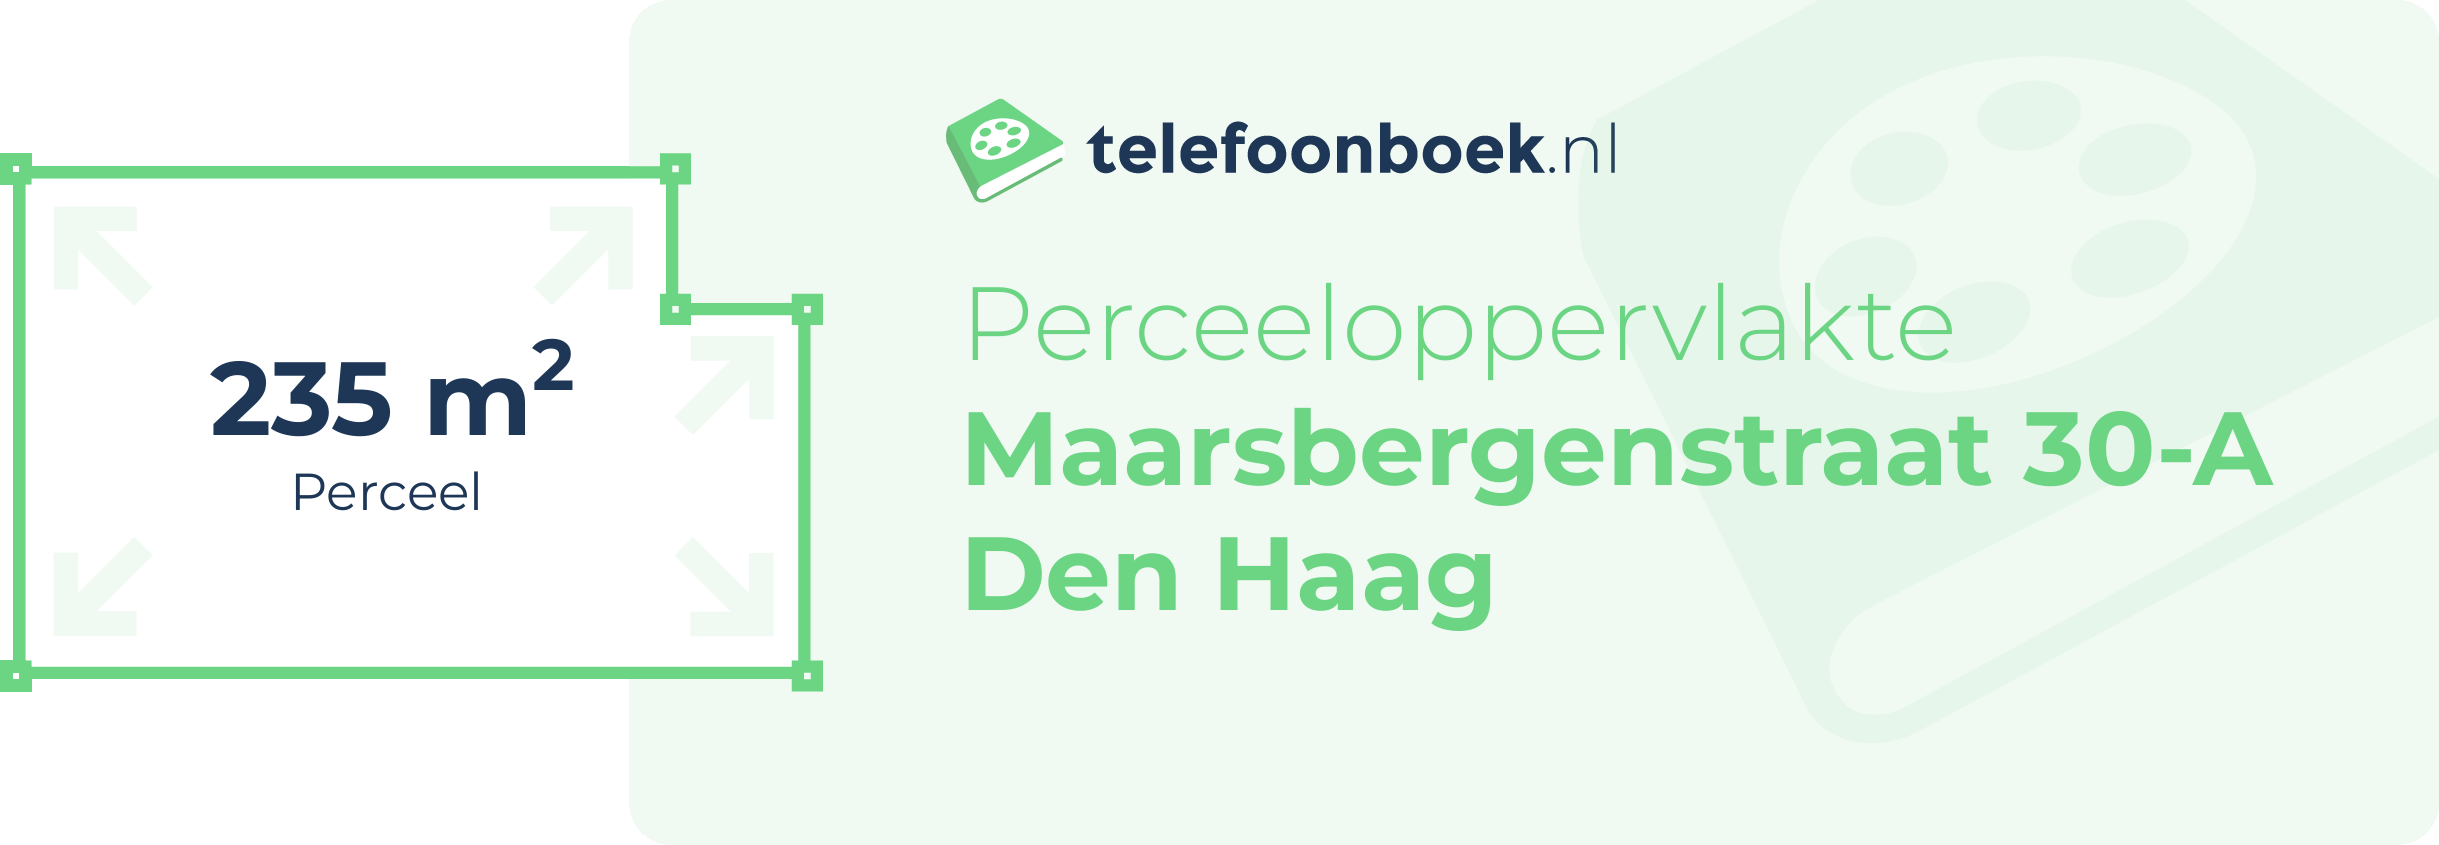 Perceeloppervlakte Maarsbergenstraat 30-A Den Haag